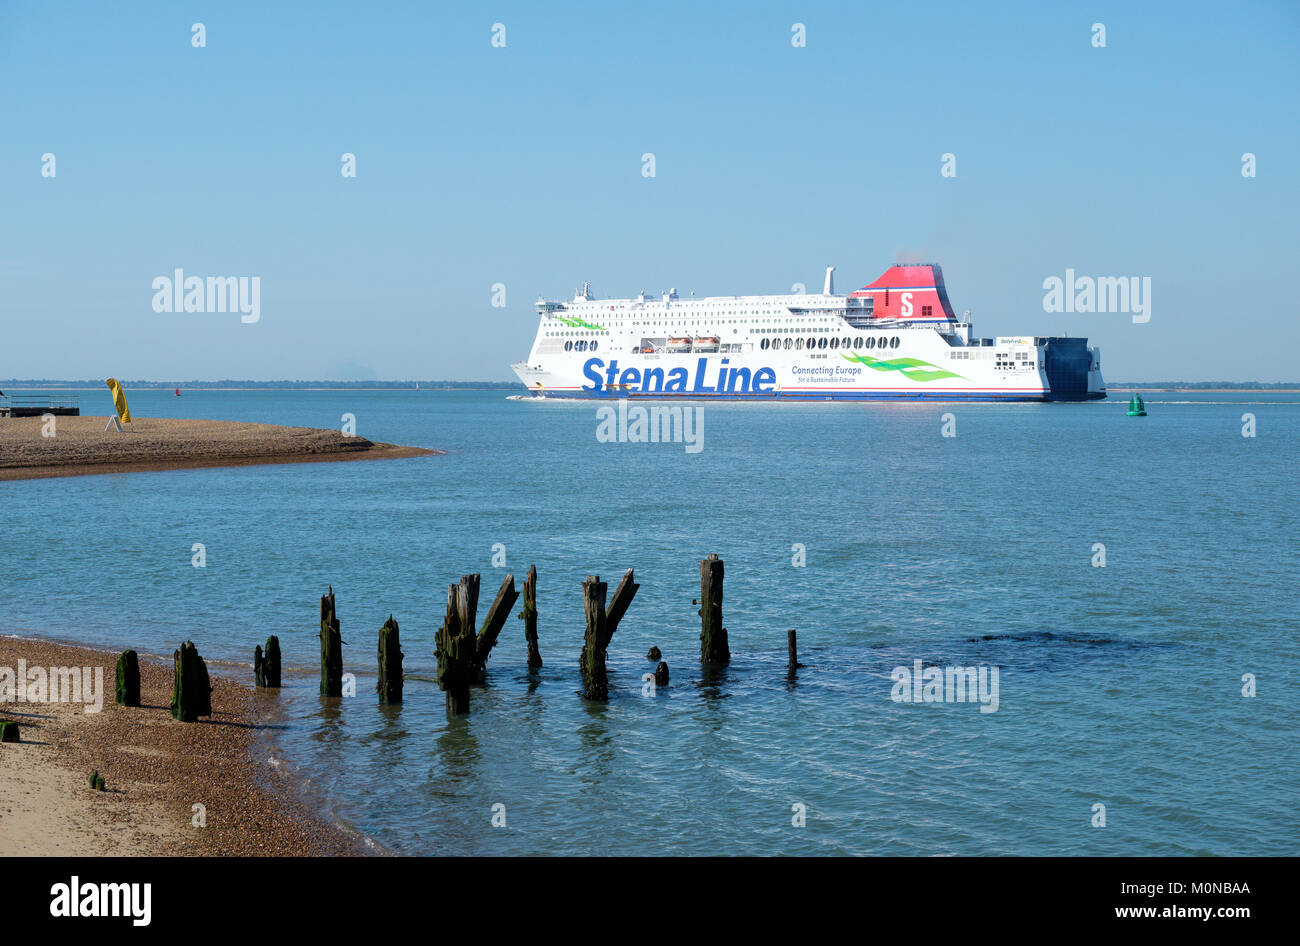 La Stena Line RoPax (roll-on/roll-off/alojamiento de pasajeros), Stena Brittanica ferry sale desde Harwich en ruta al gancho de Holanda, Felixstow Foto de stock